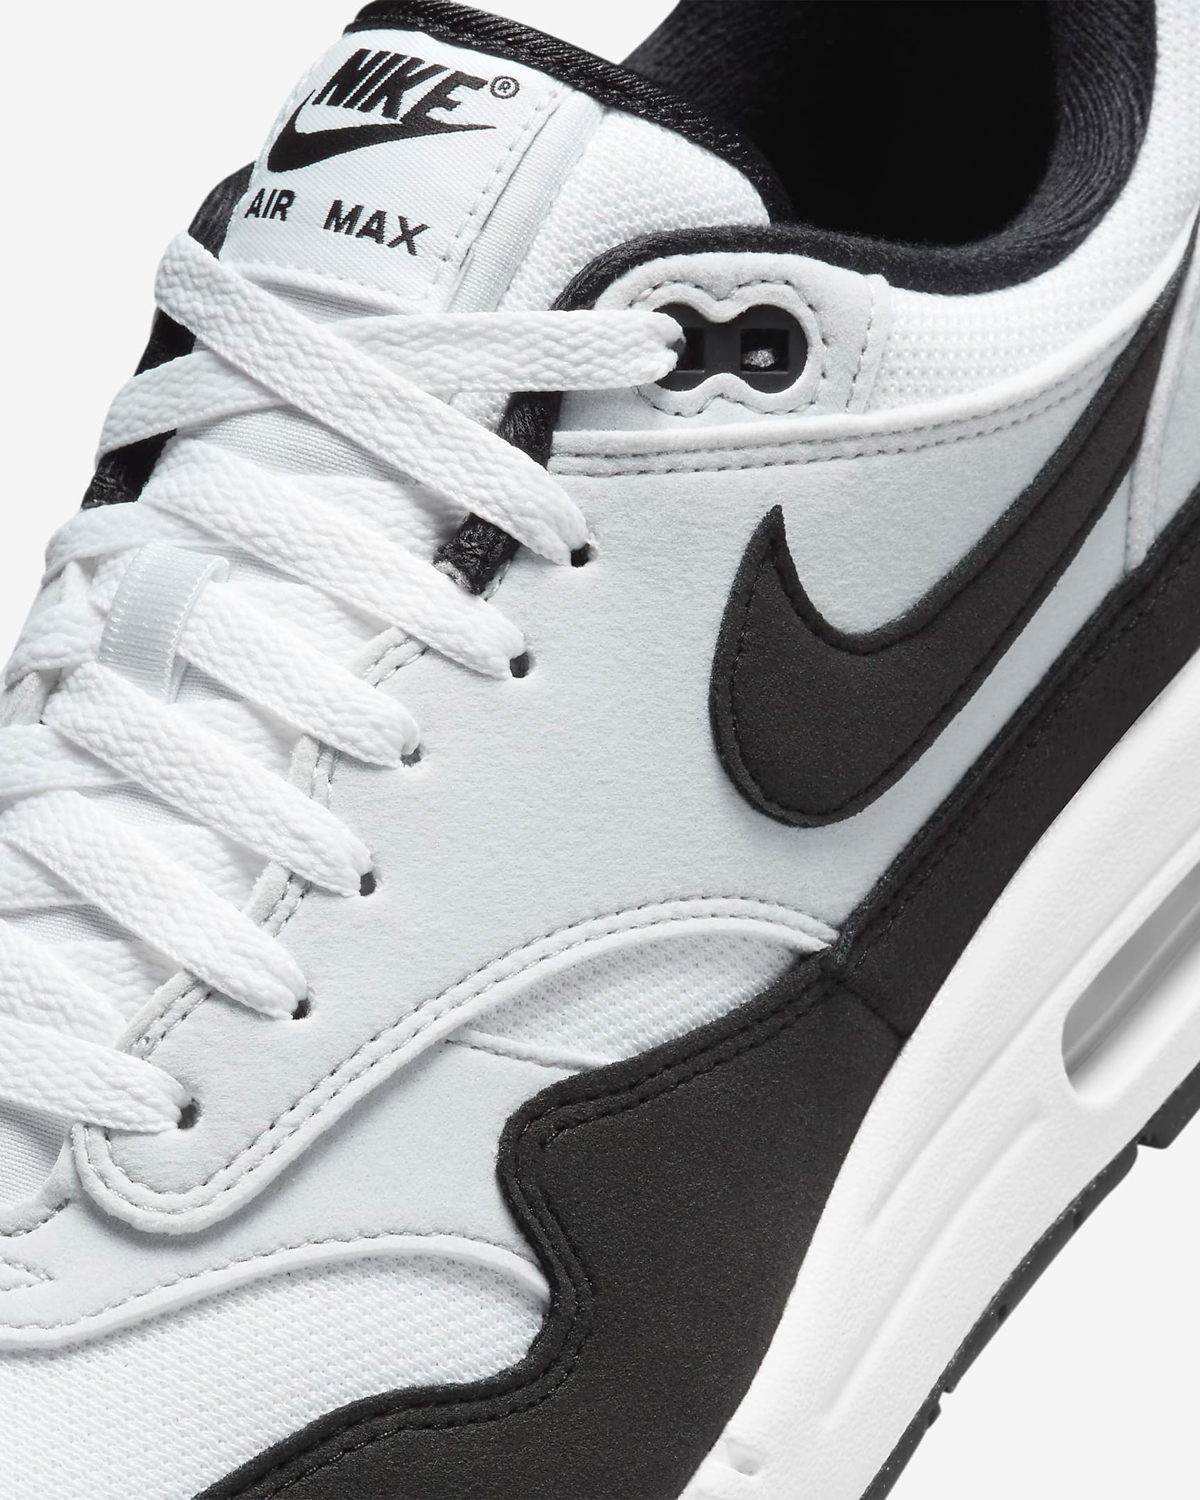 Nike-Air-Max-1-White-Black-7